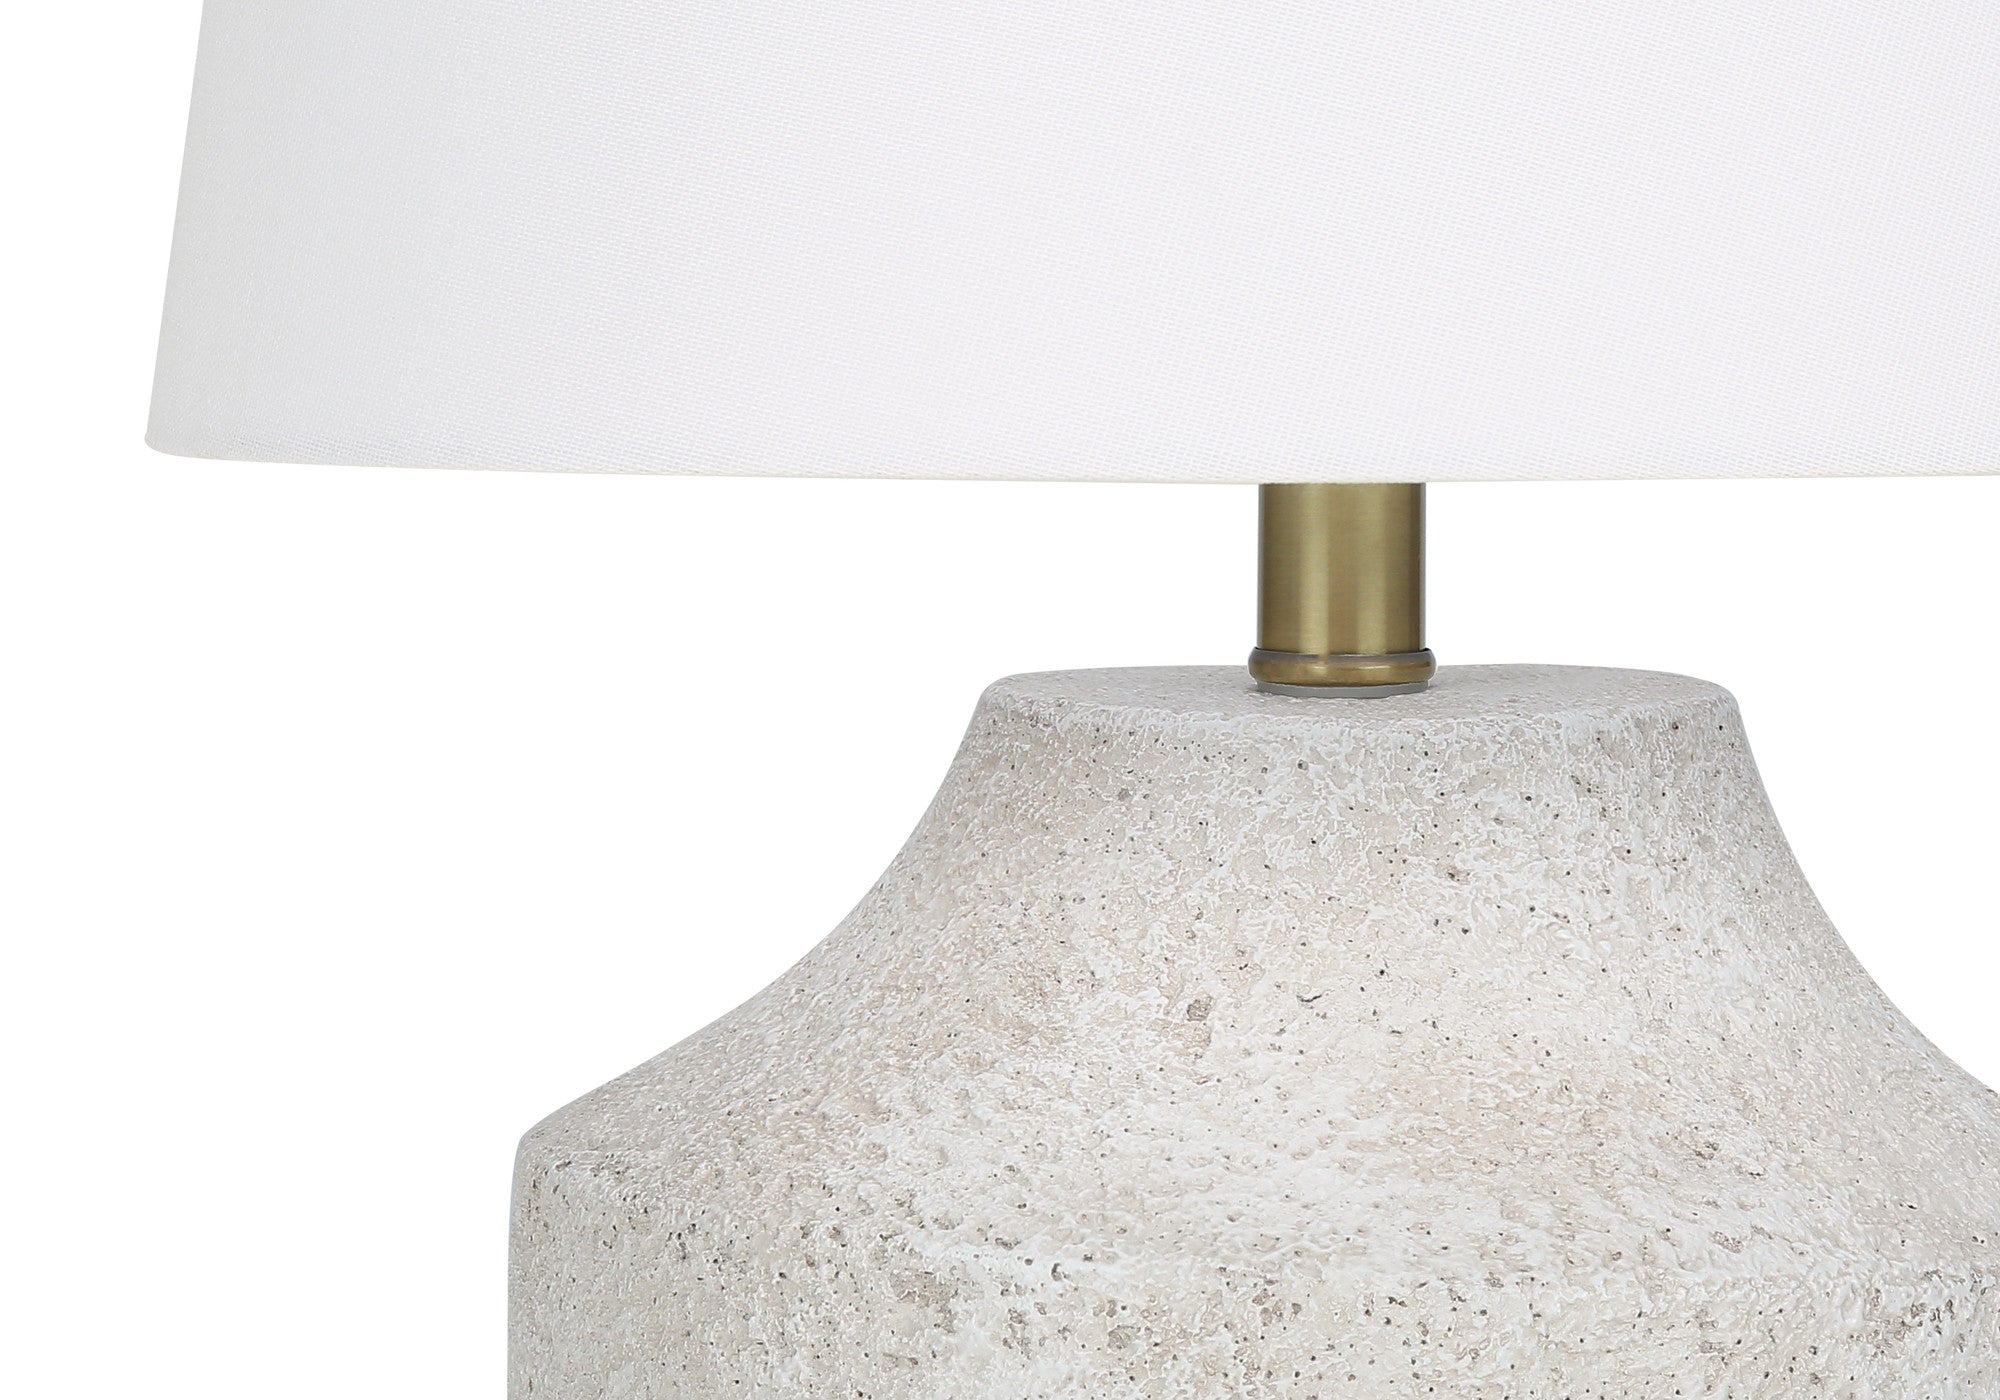 20" Cream Concrete Urn Table Lamp With Cream Empire Shade